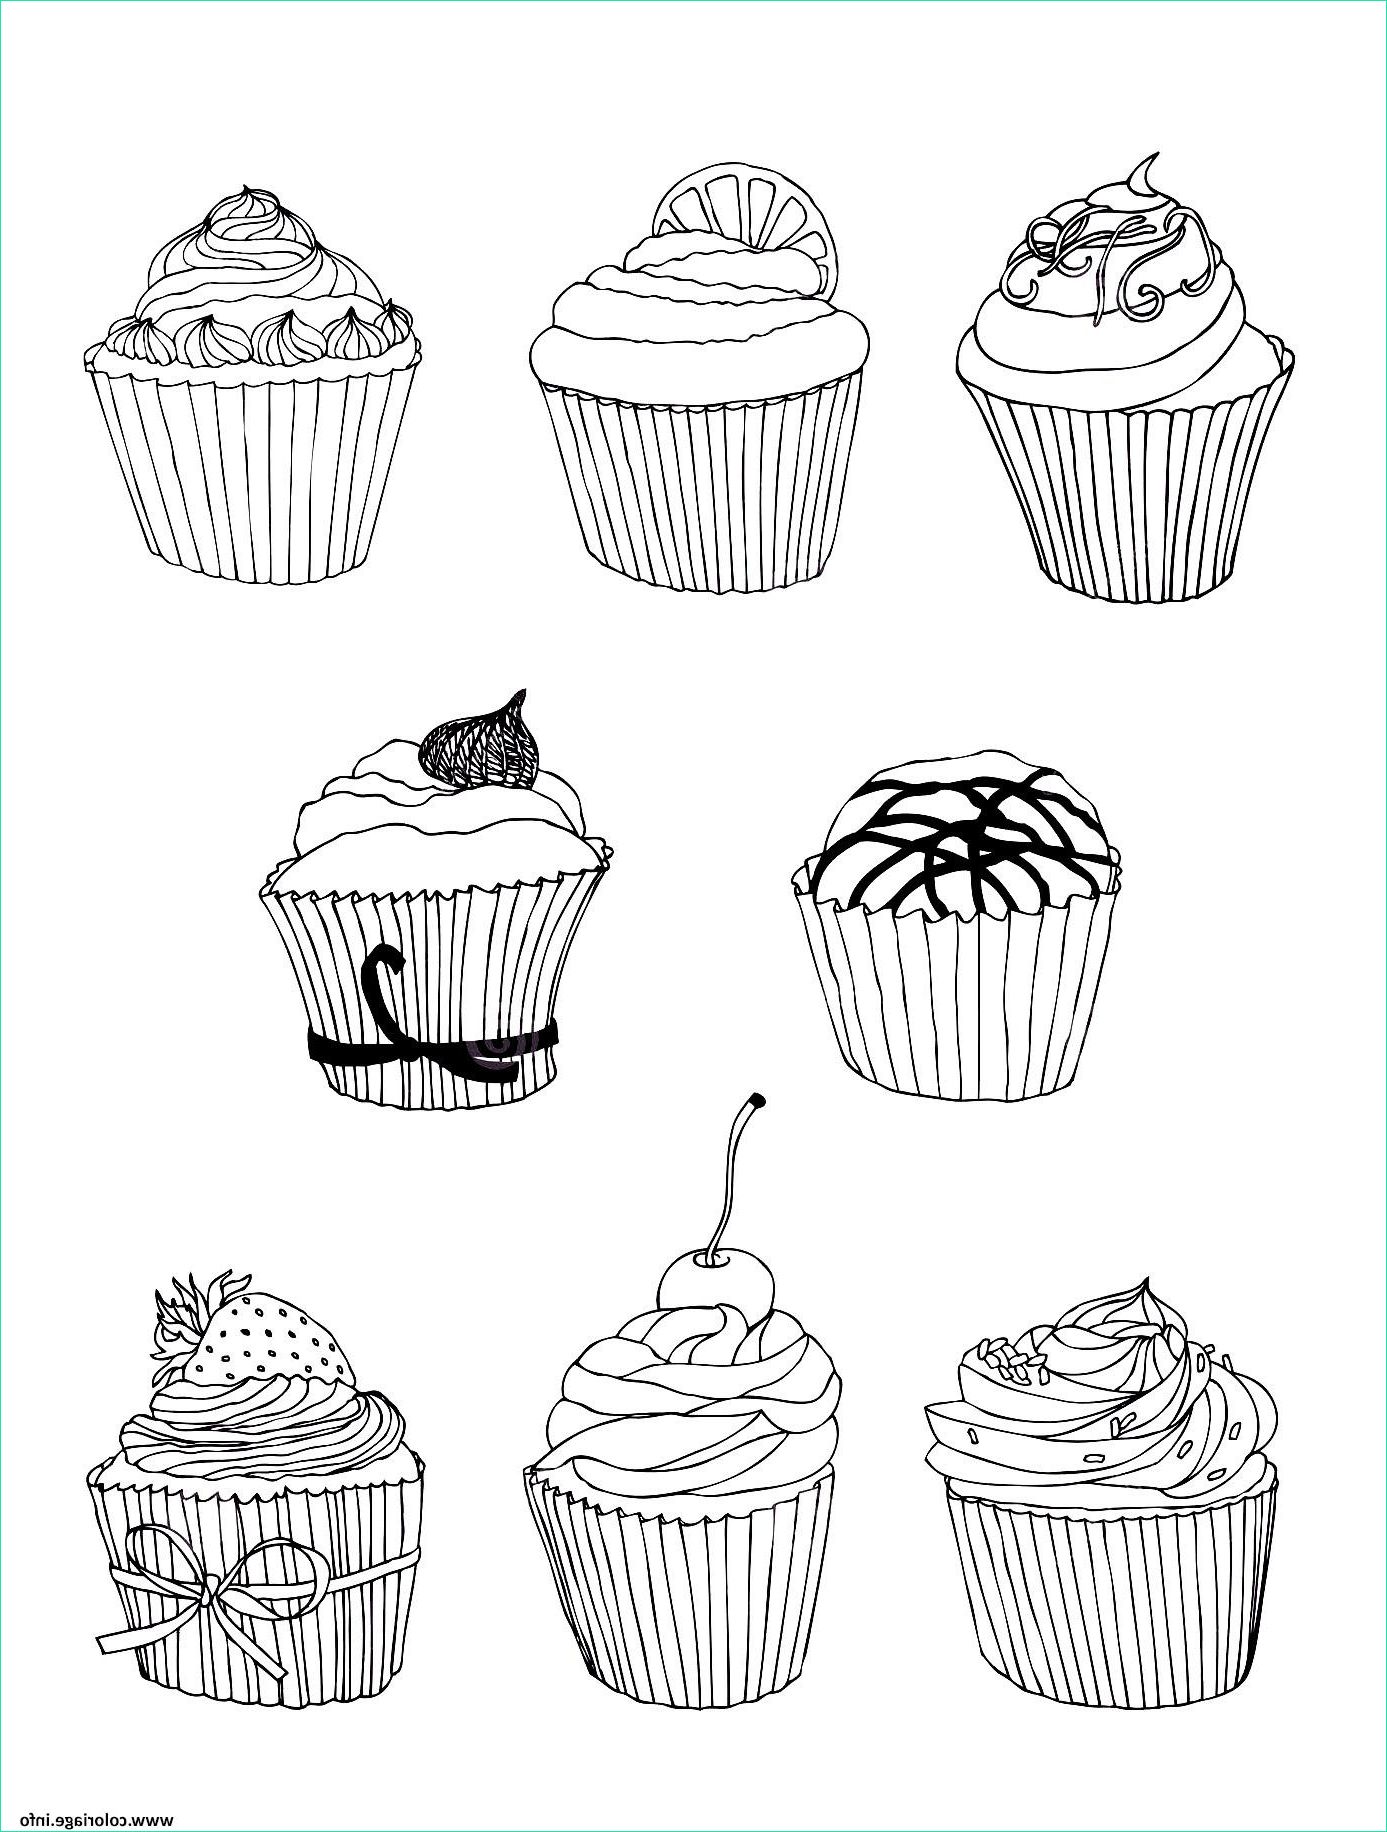 gratuit cupcakes coloriage dessin